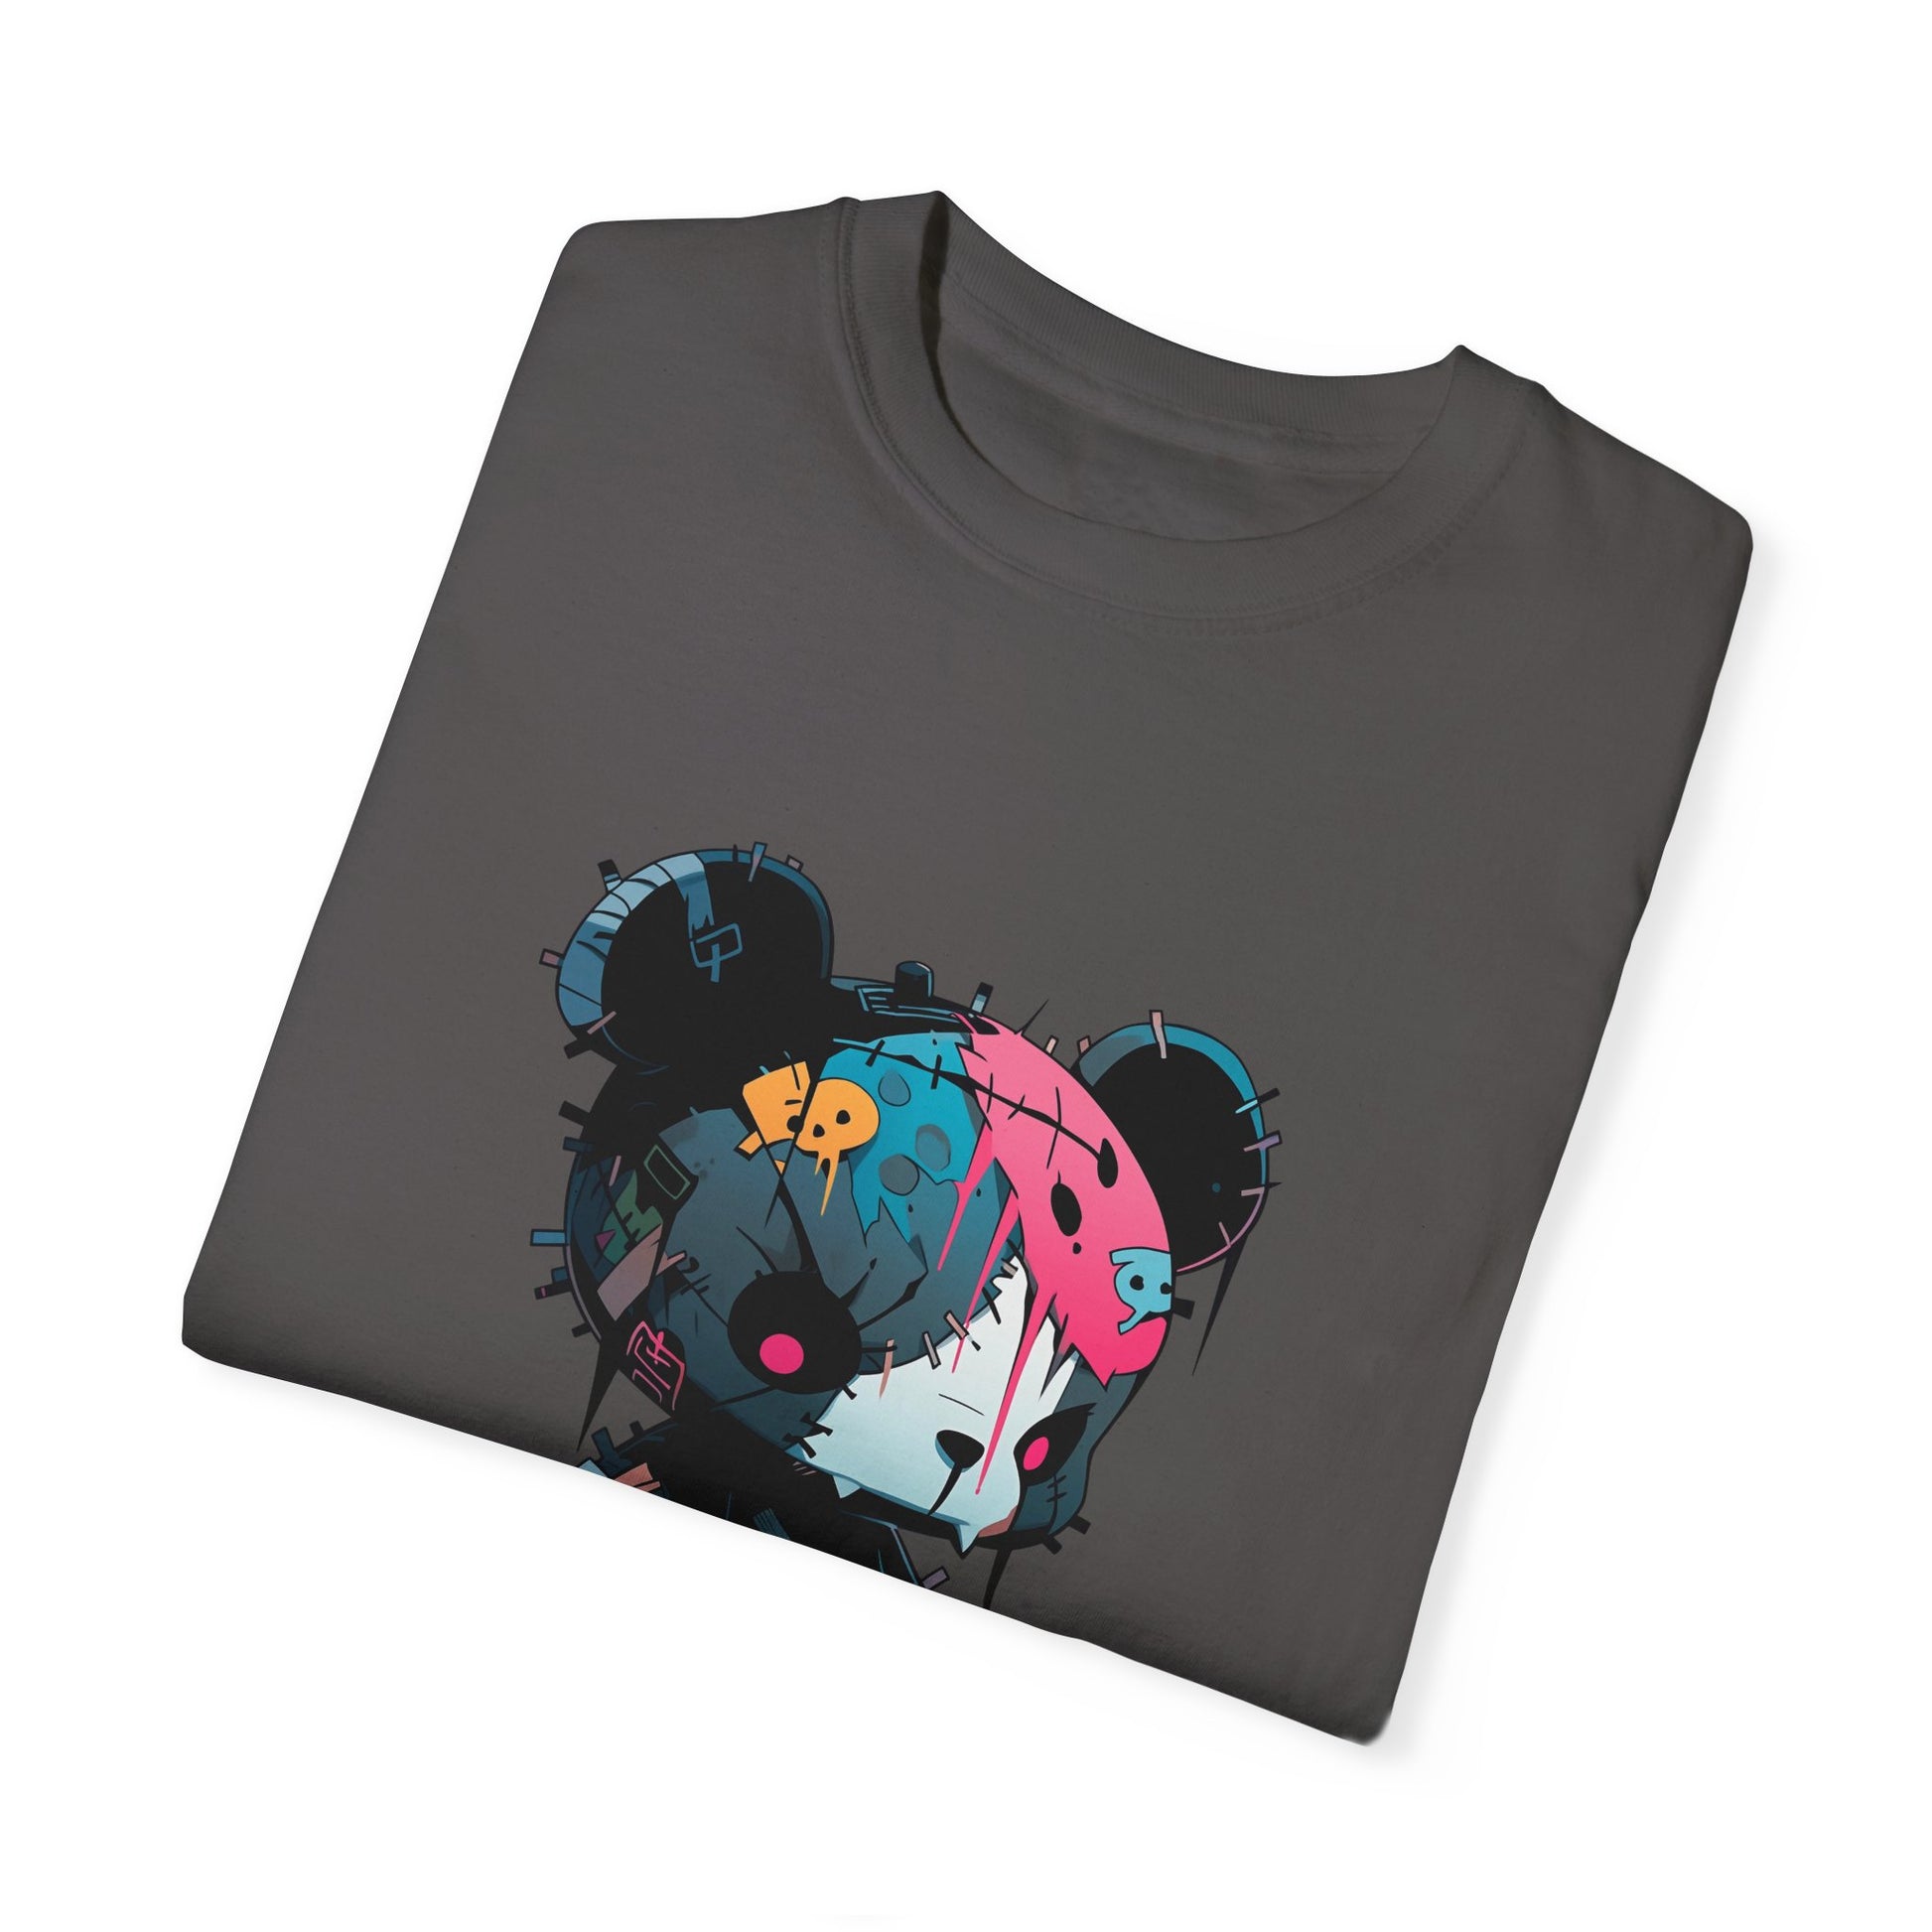 Hip Hop Teddy Bear Graphic Unisex Garment-dyed T-shirt Cotton Funny Humorous Graphic Soft Premium Unisex Men Women Graphite T-shirt Birthday Gift-38